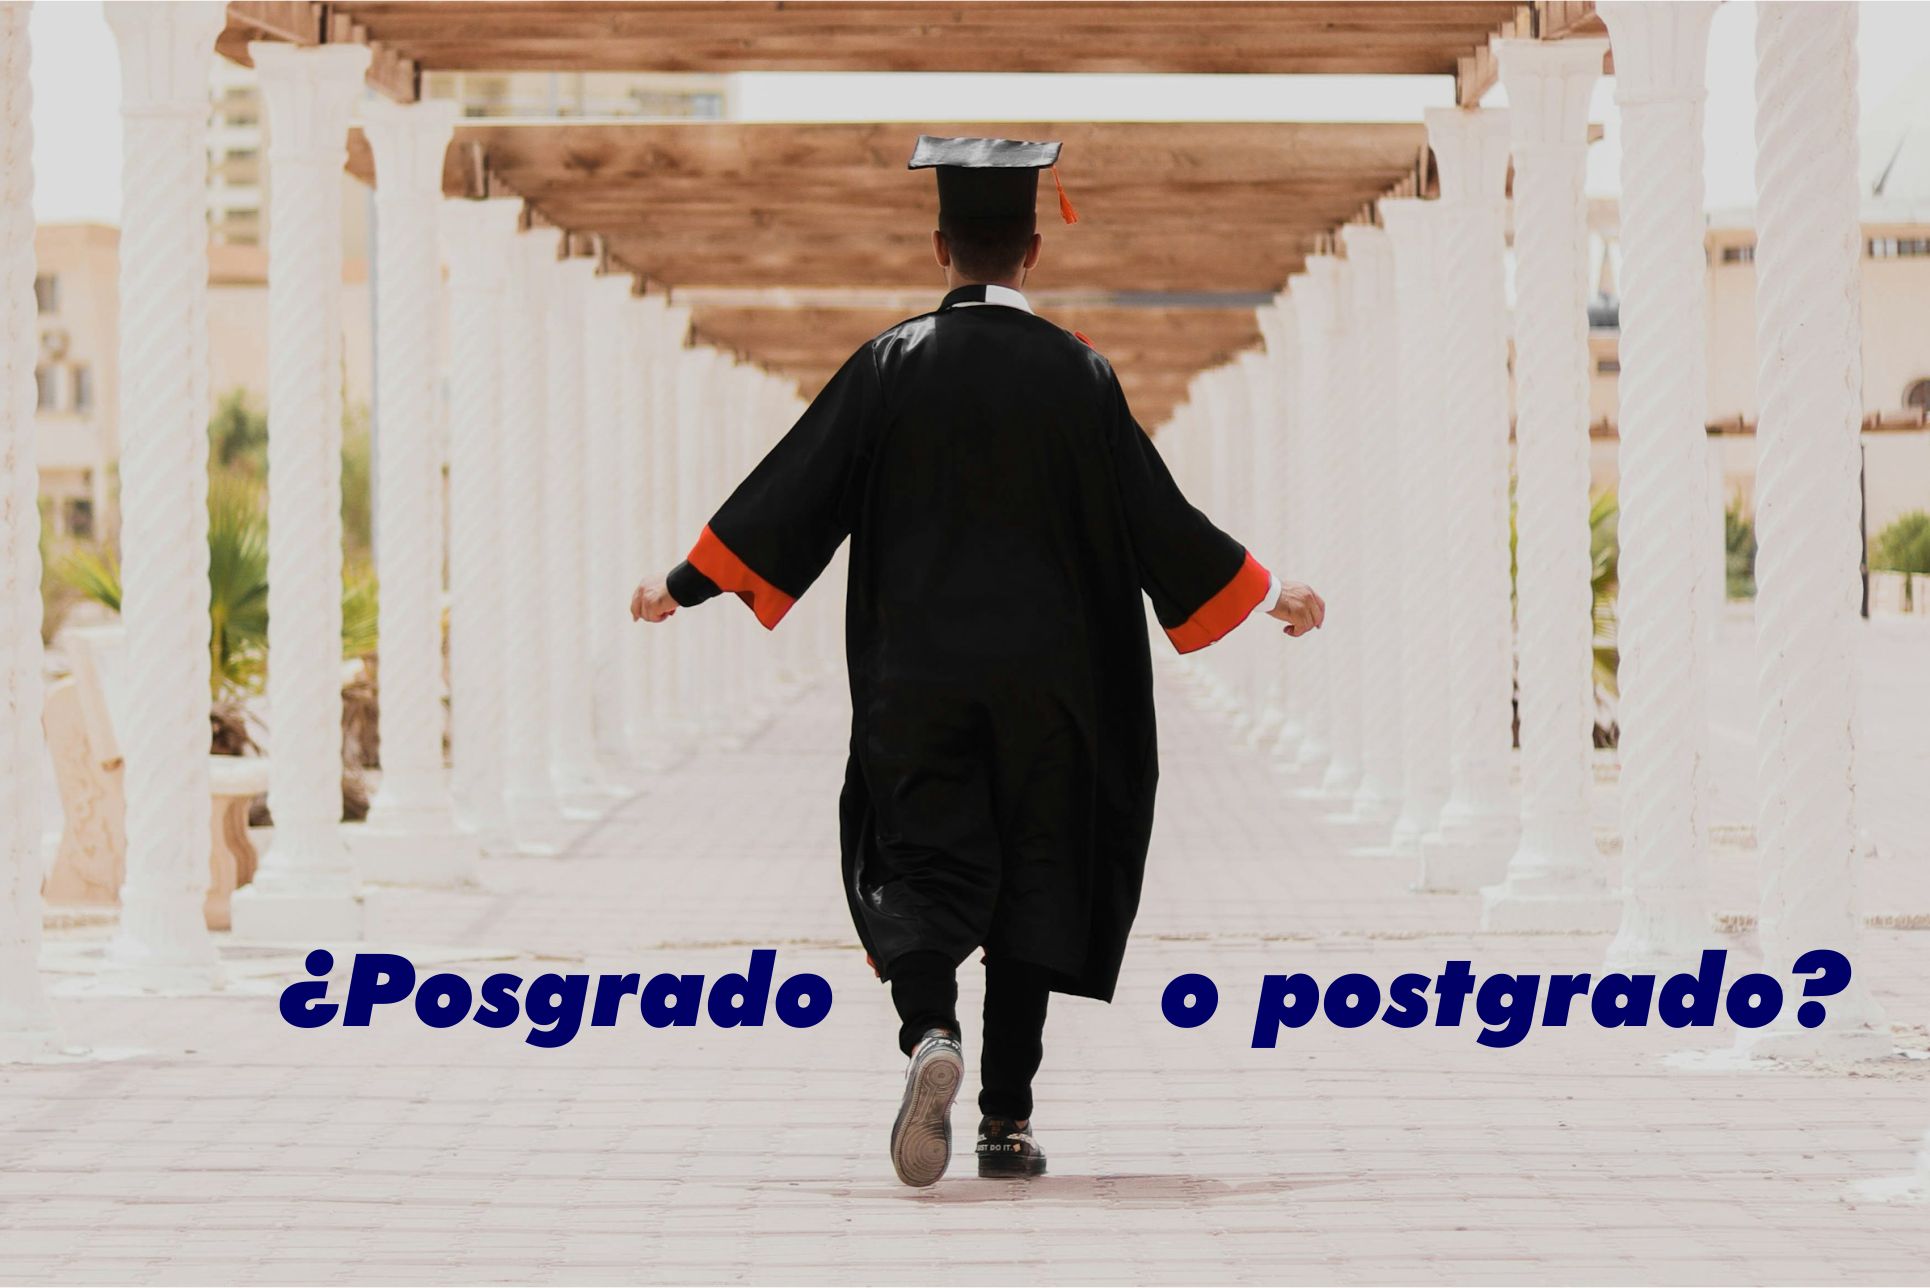 ¿“Posgrado” o “postgrado”?